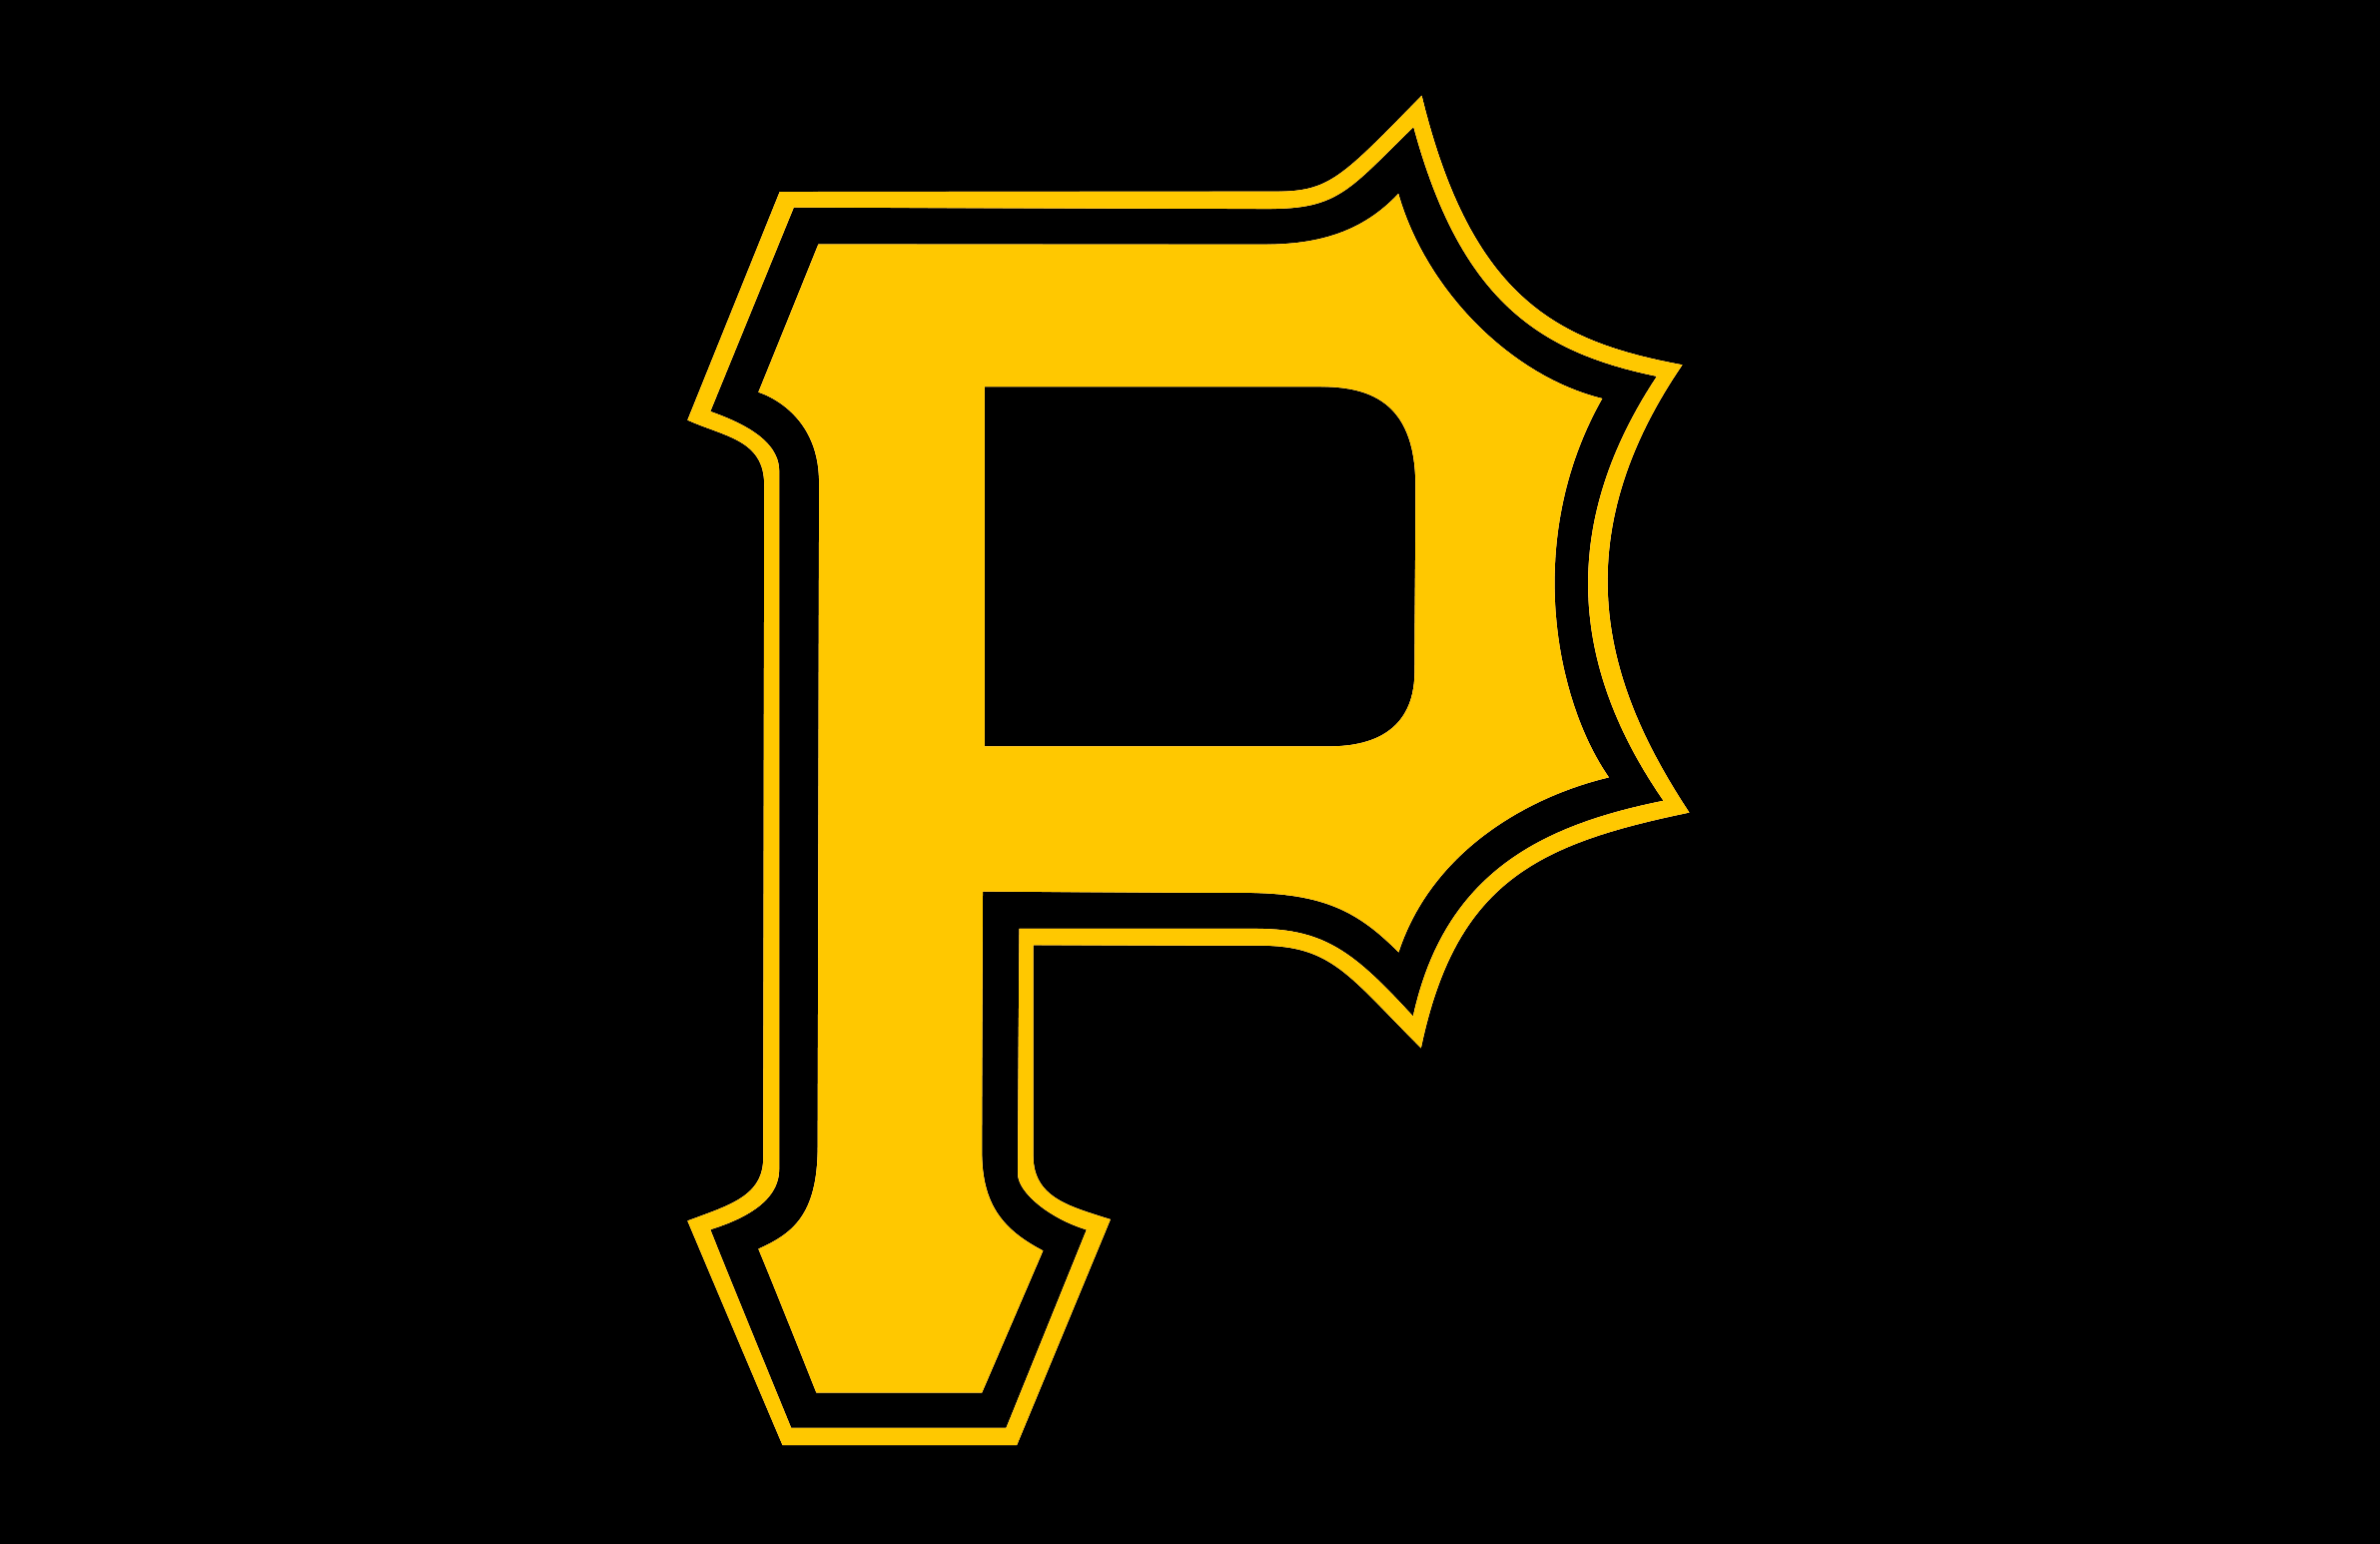 Pittsburgh Pirates svg, bundle logo, svg, png, eps, dxf, Bas